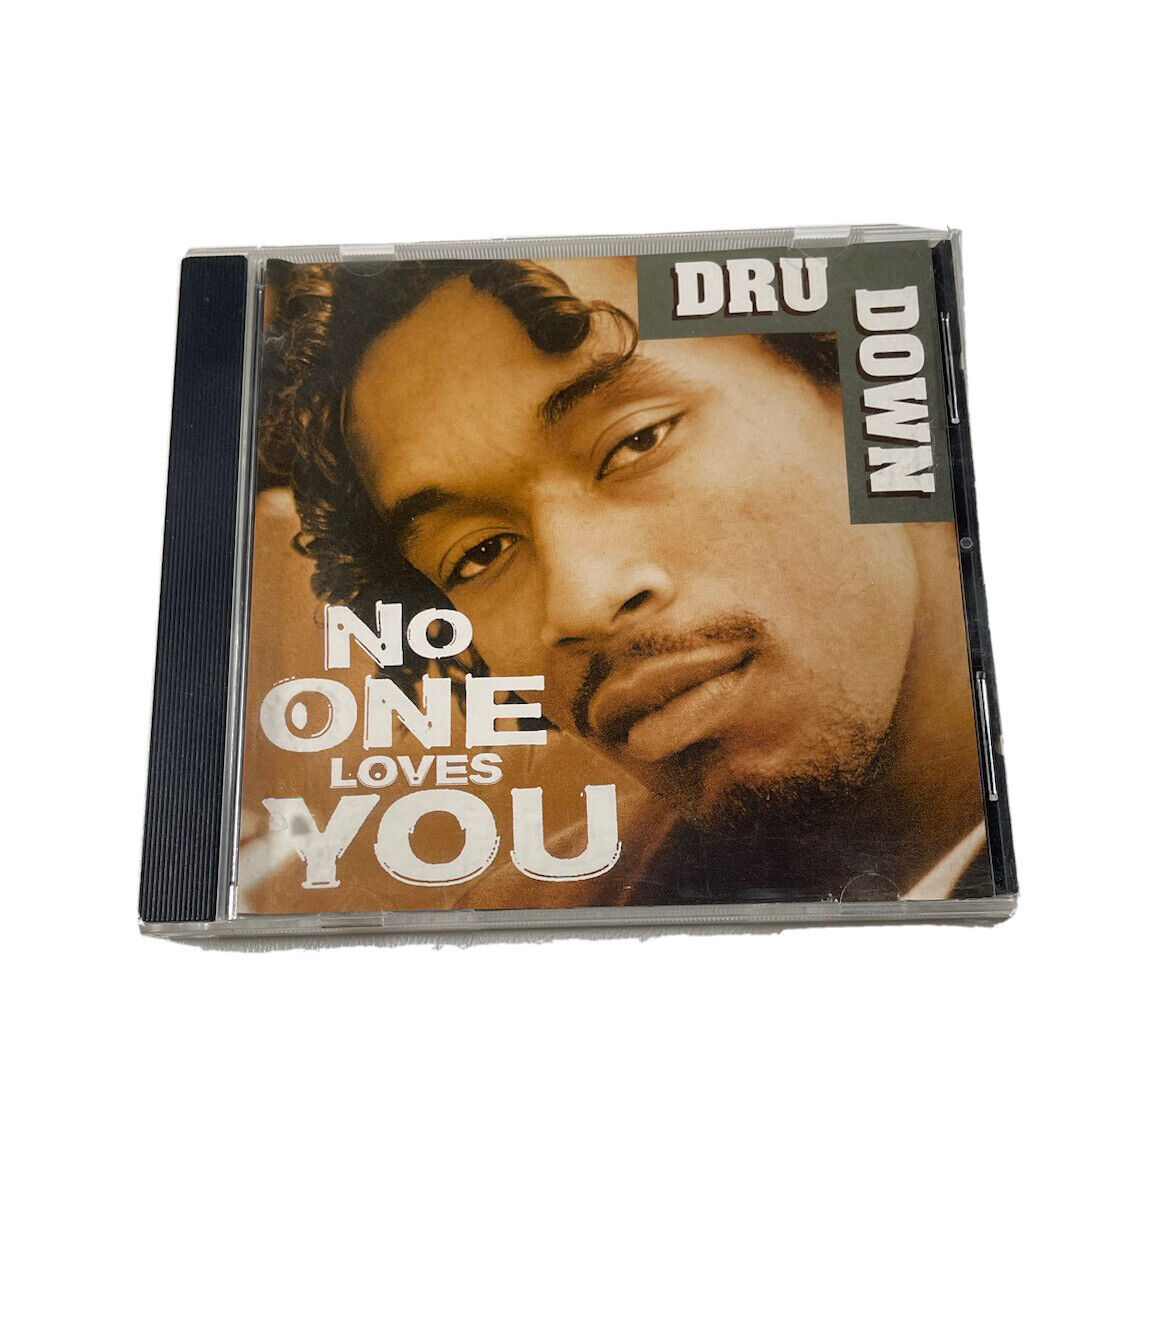 Dru Down Cd No One Loves You Single Hip Hop 1995 Relativity Records Rap Music 